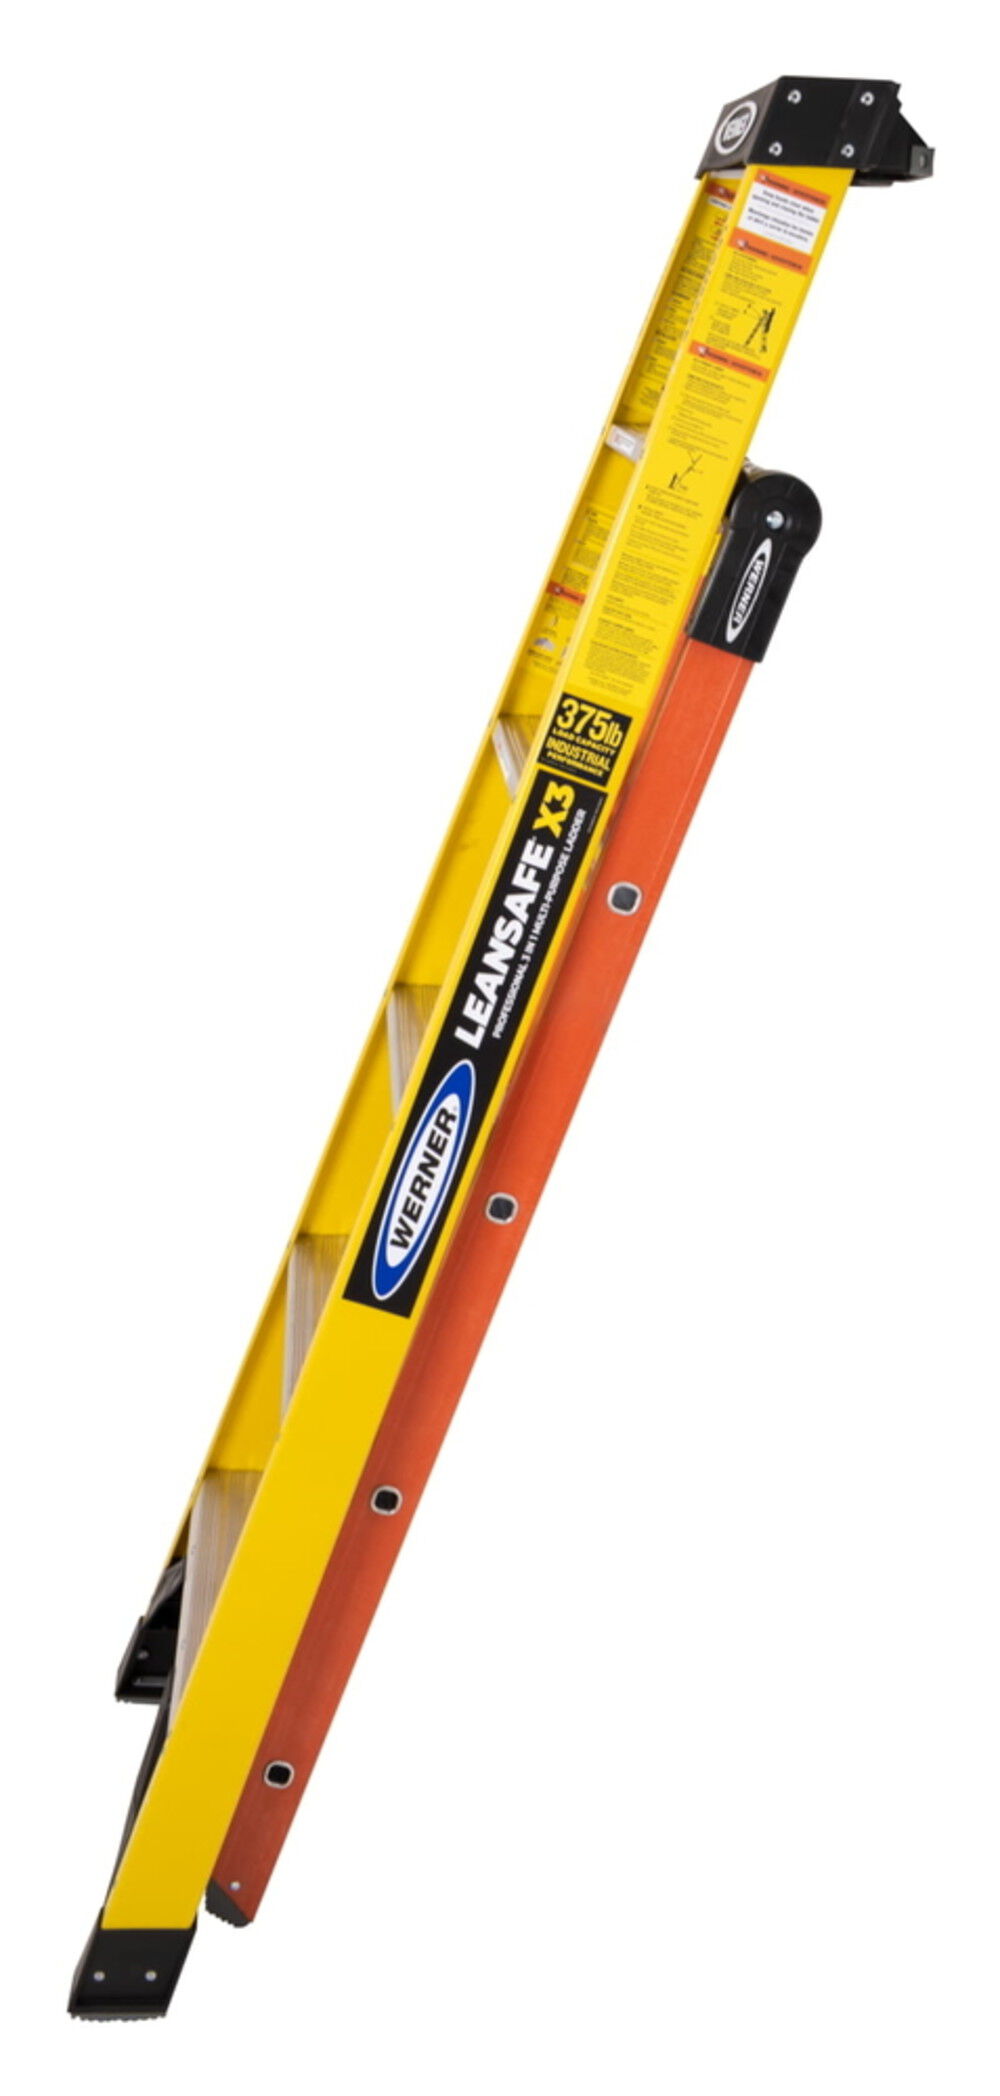 LEANSAFE X3 6 ft 10 ft. Fiberglass Professional 3-in-1 Multi-Purpose Ladder 